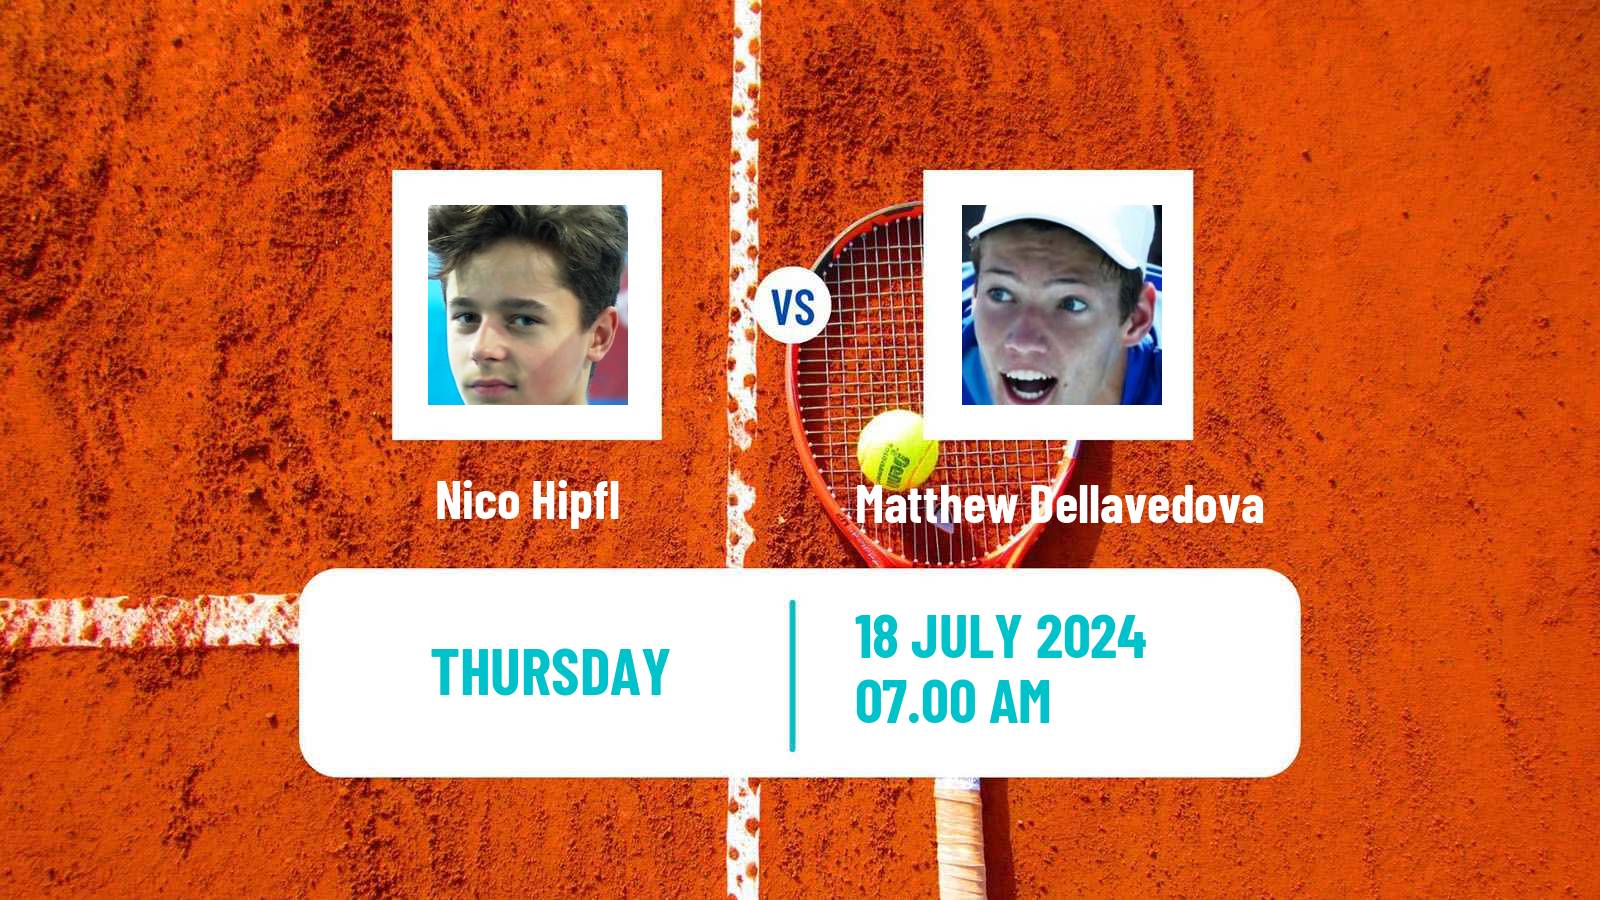 Tennis ITF M25 Telfs Men Nico Hipfl - Matthew Dellavedova